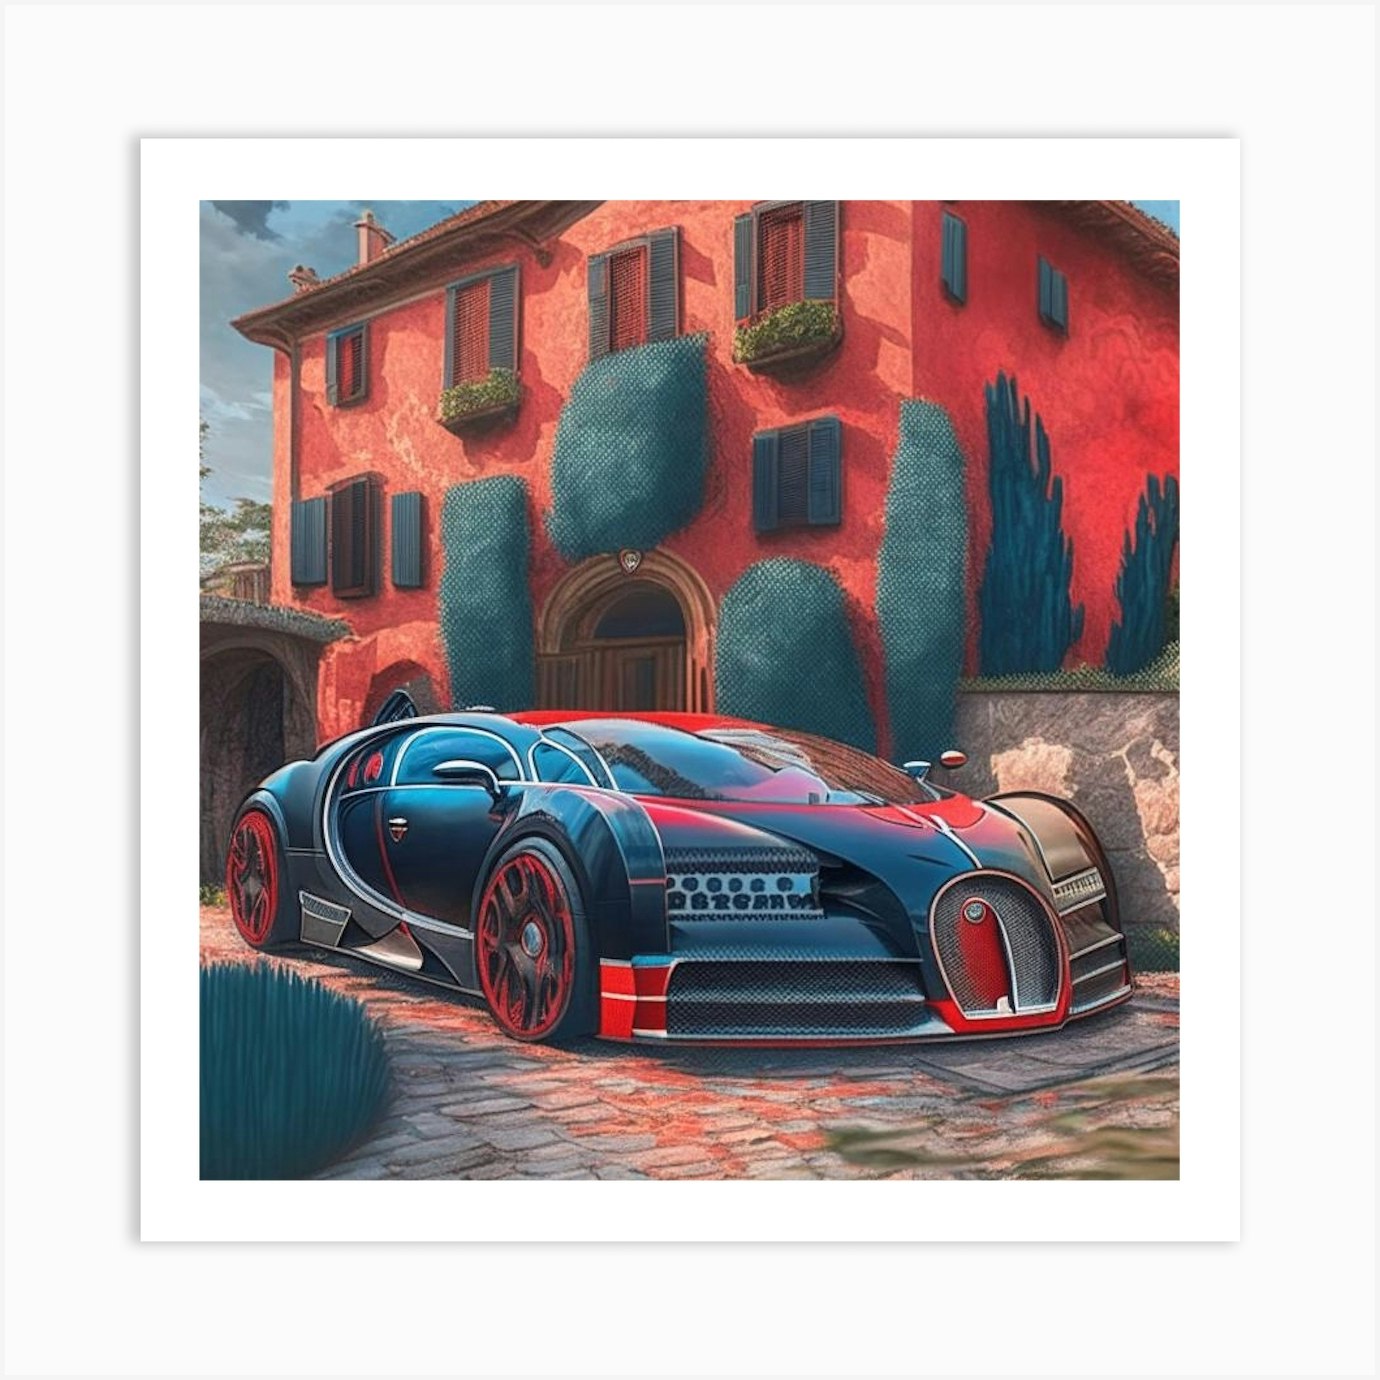 Bugatti Veyron 5 Art Fy - Print Nohacreations/art_bridge63 by